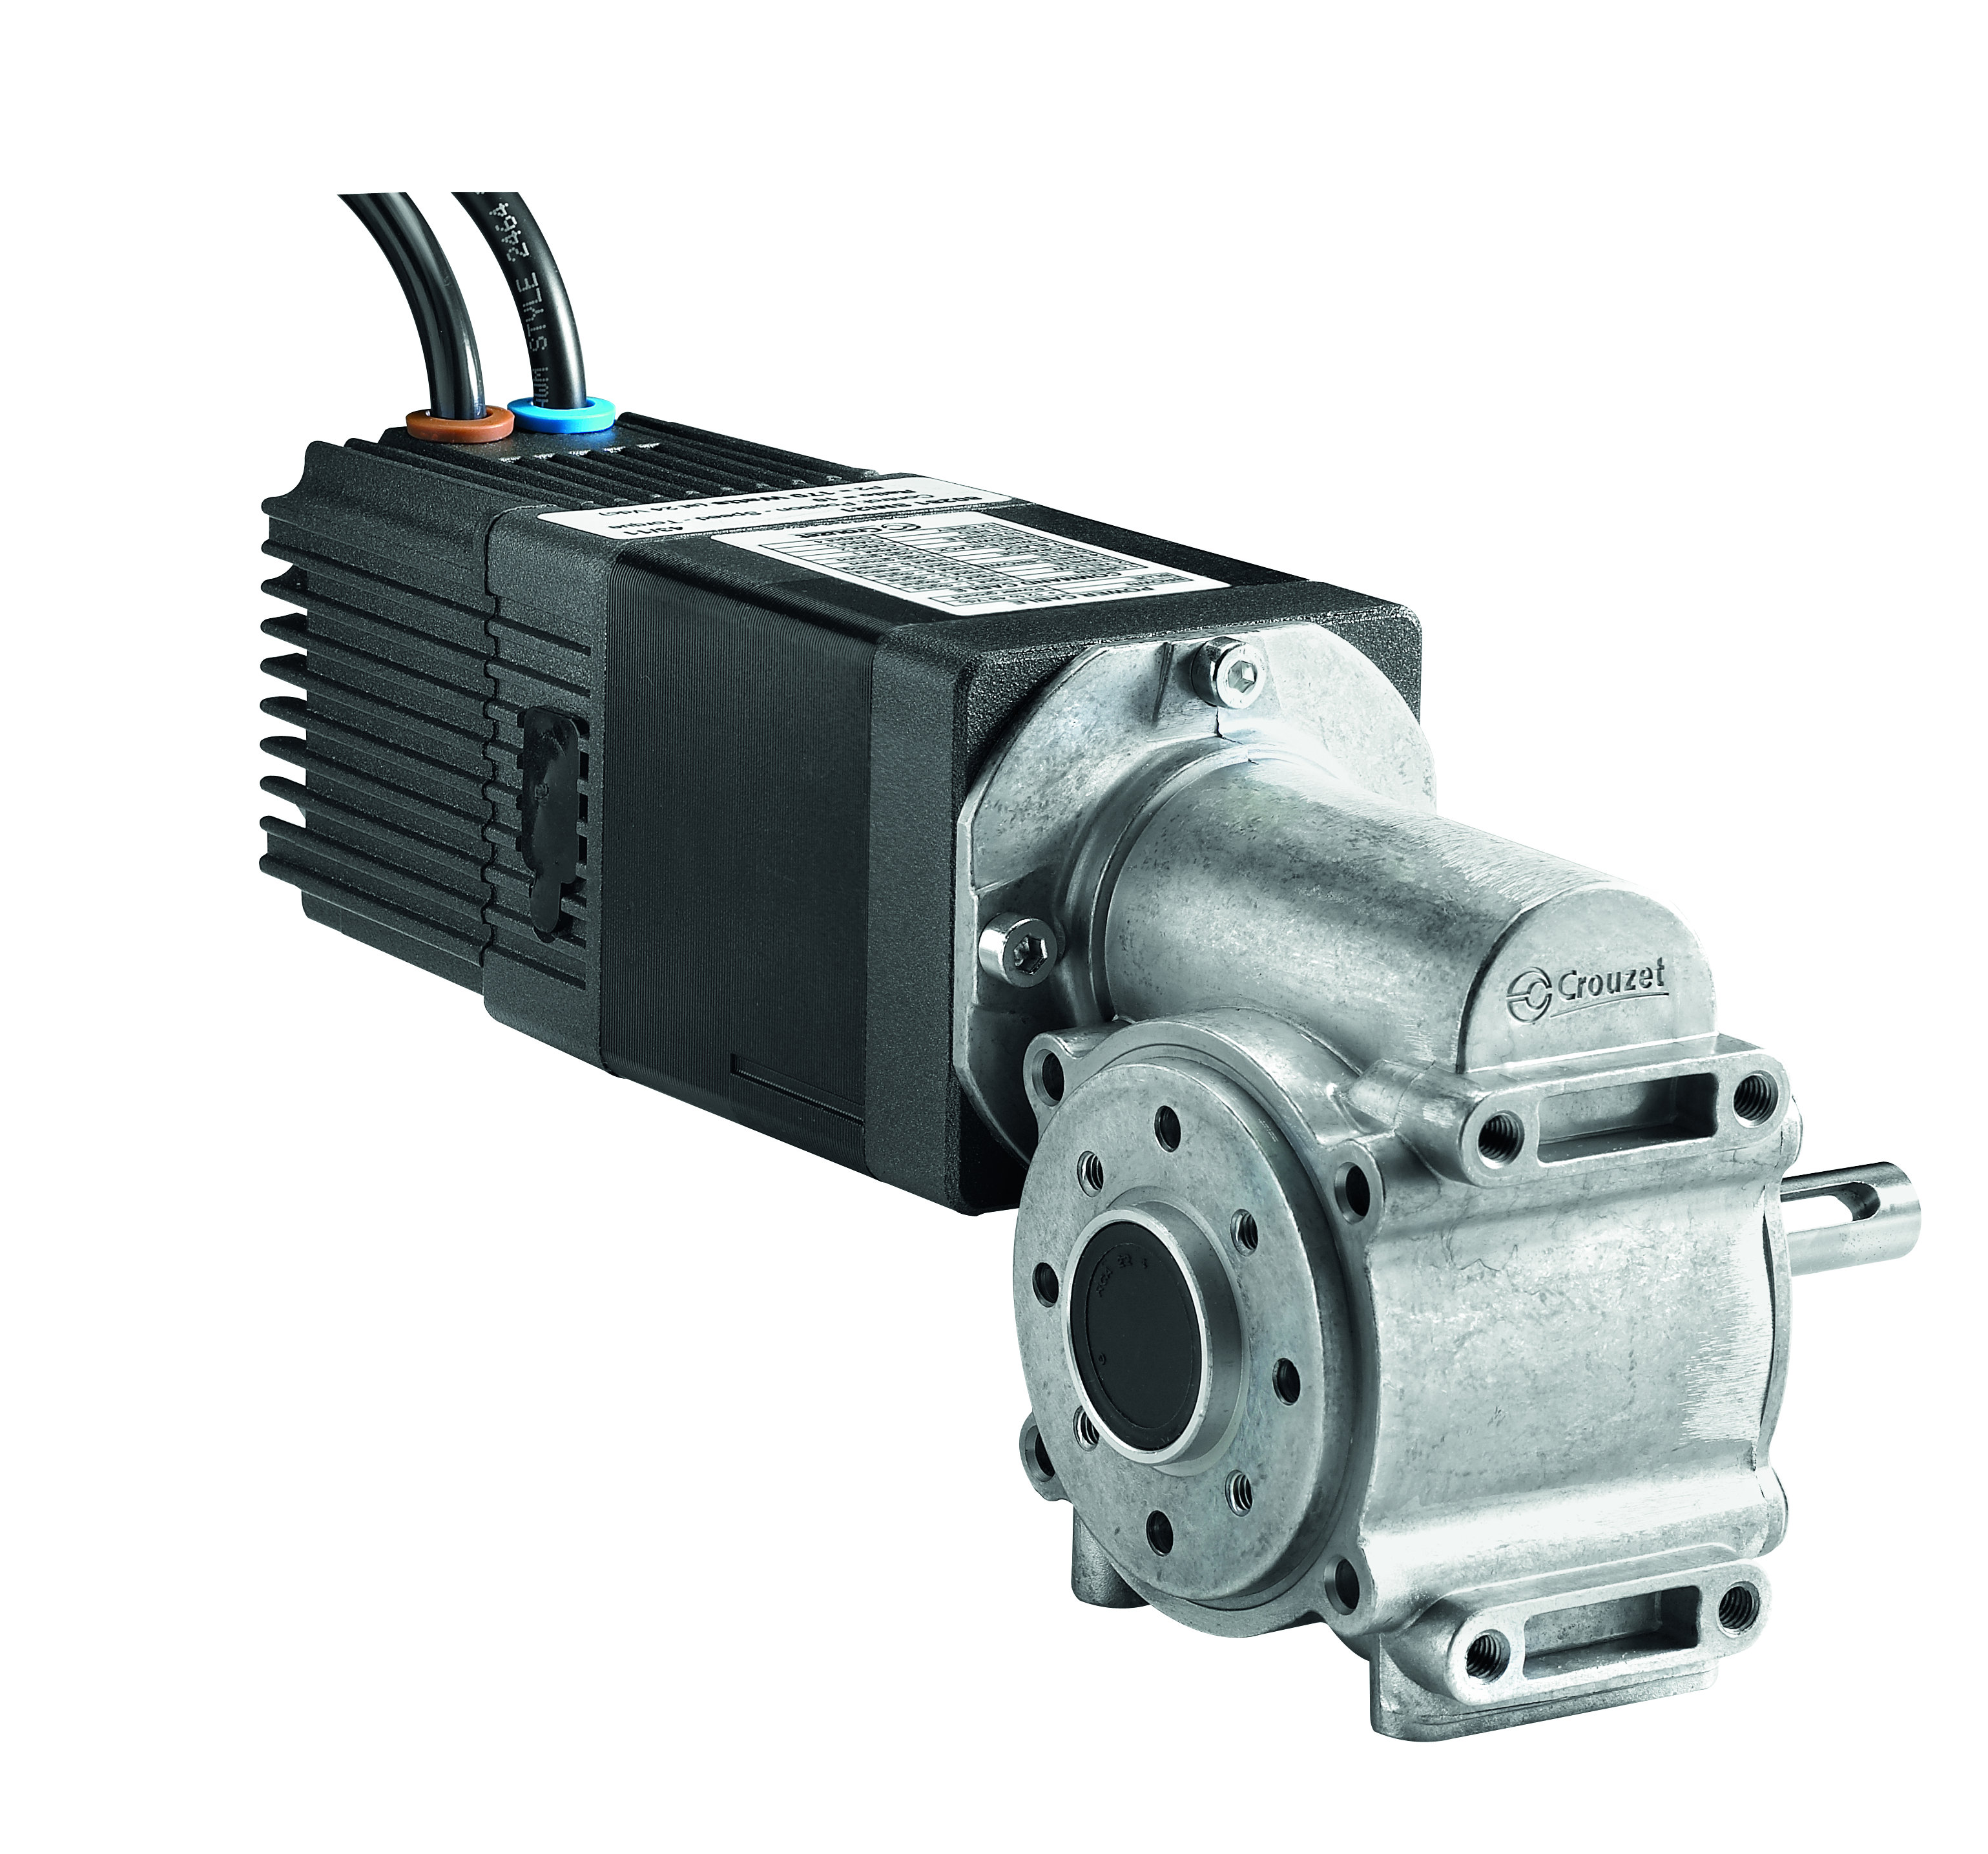 SQ57 Motor 150W 12-32Vdc + Drive TNi21 0-10V + Gearbox RAD10 ratio 5-1